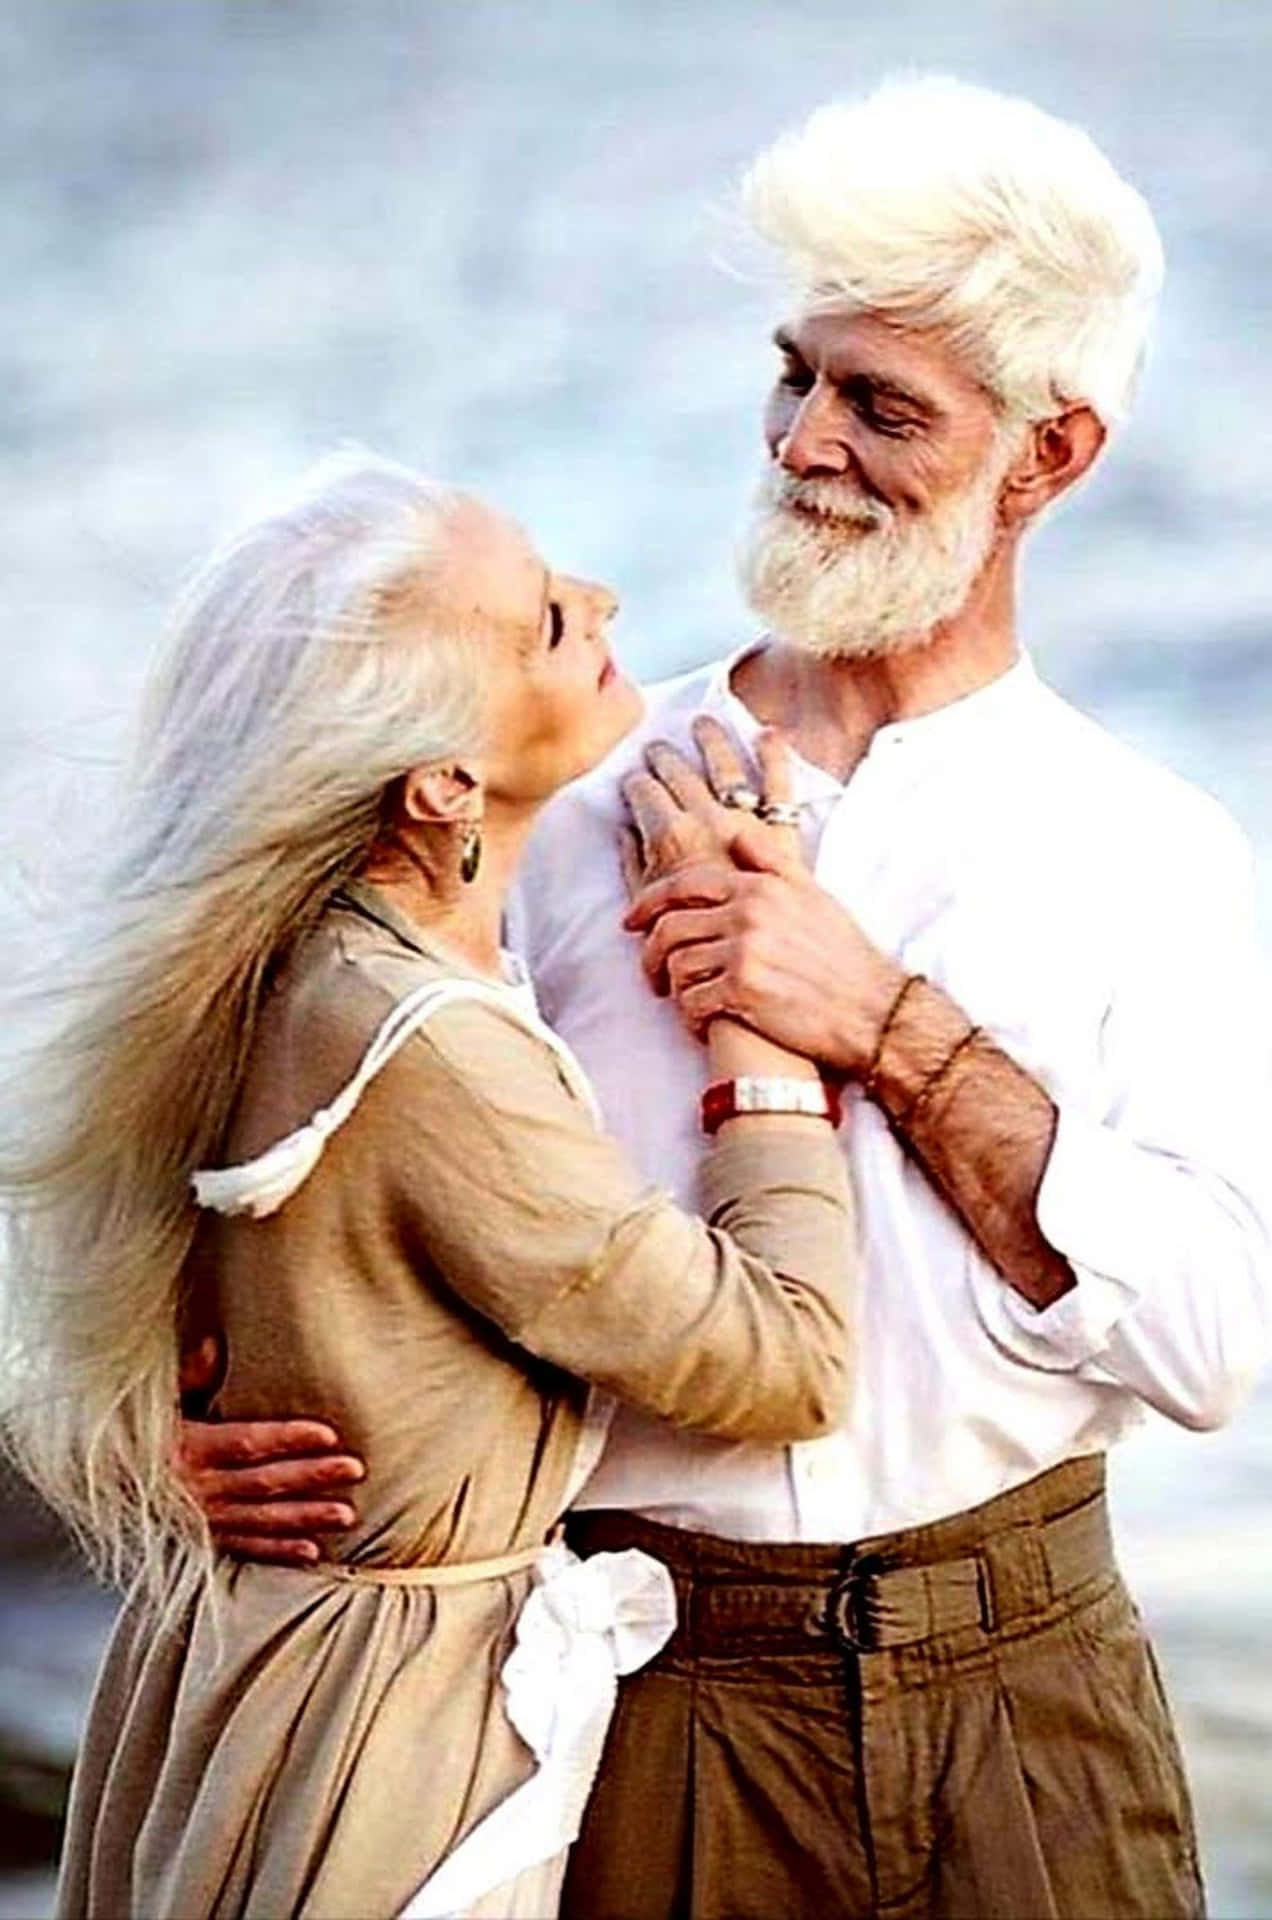 Älterespaar Mit Windzerzaustem Aussehen Wallpaper